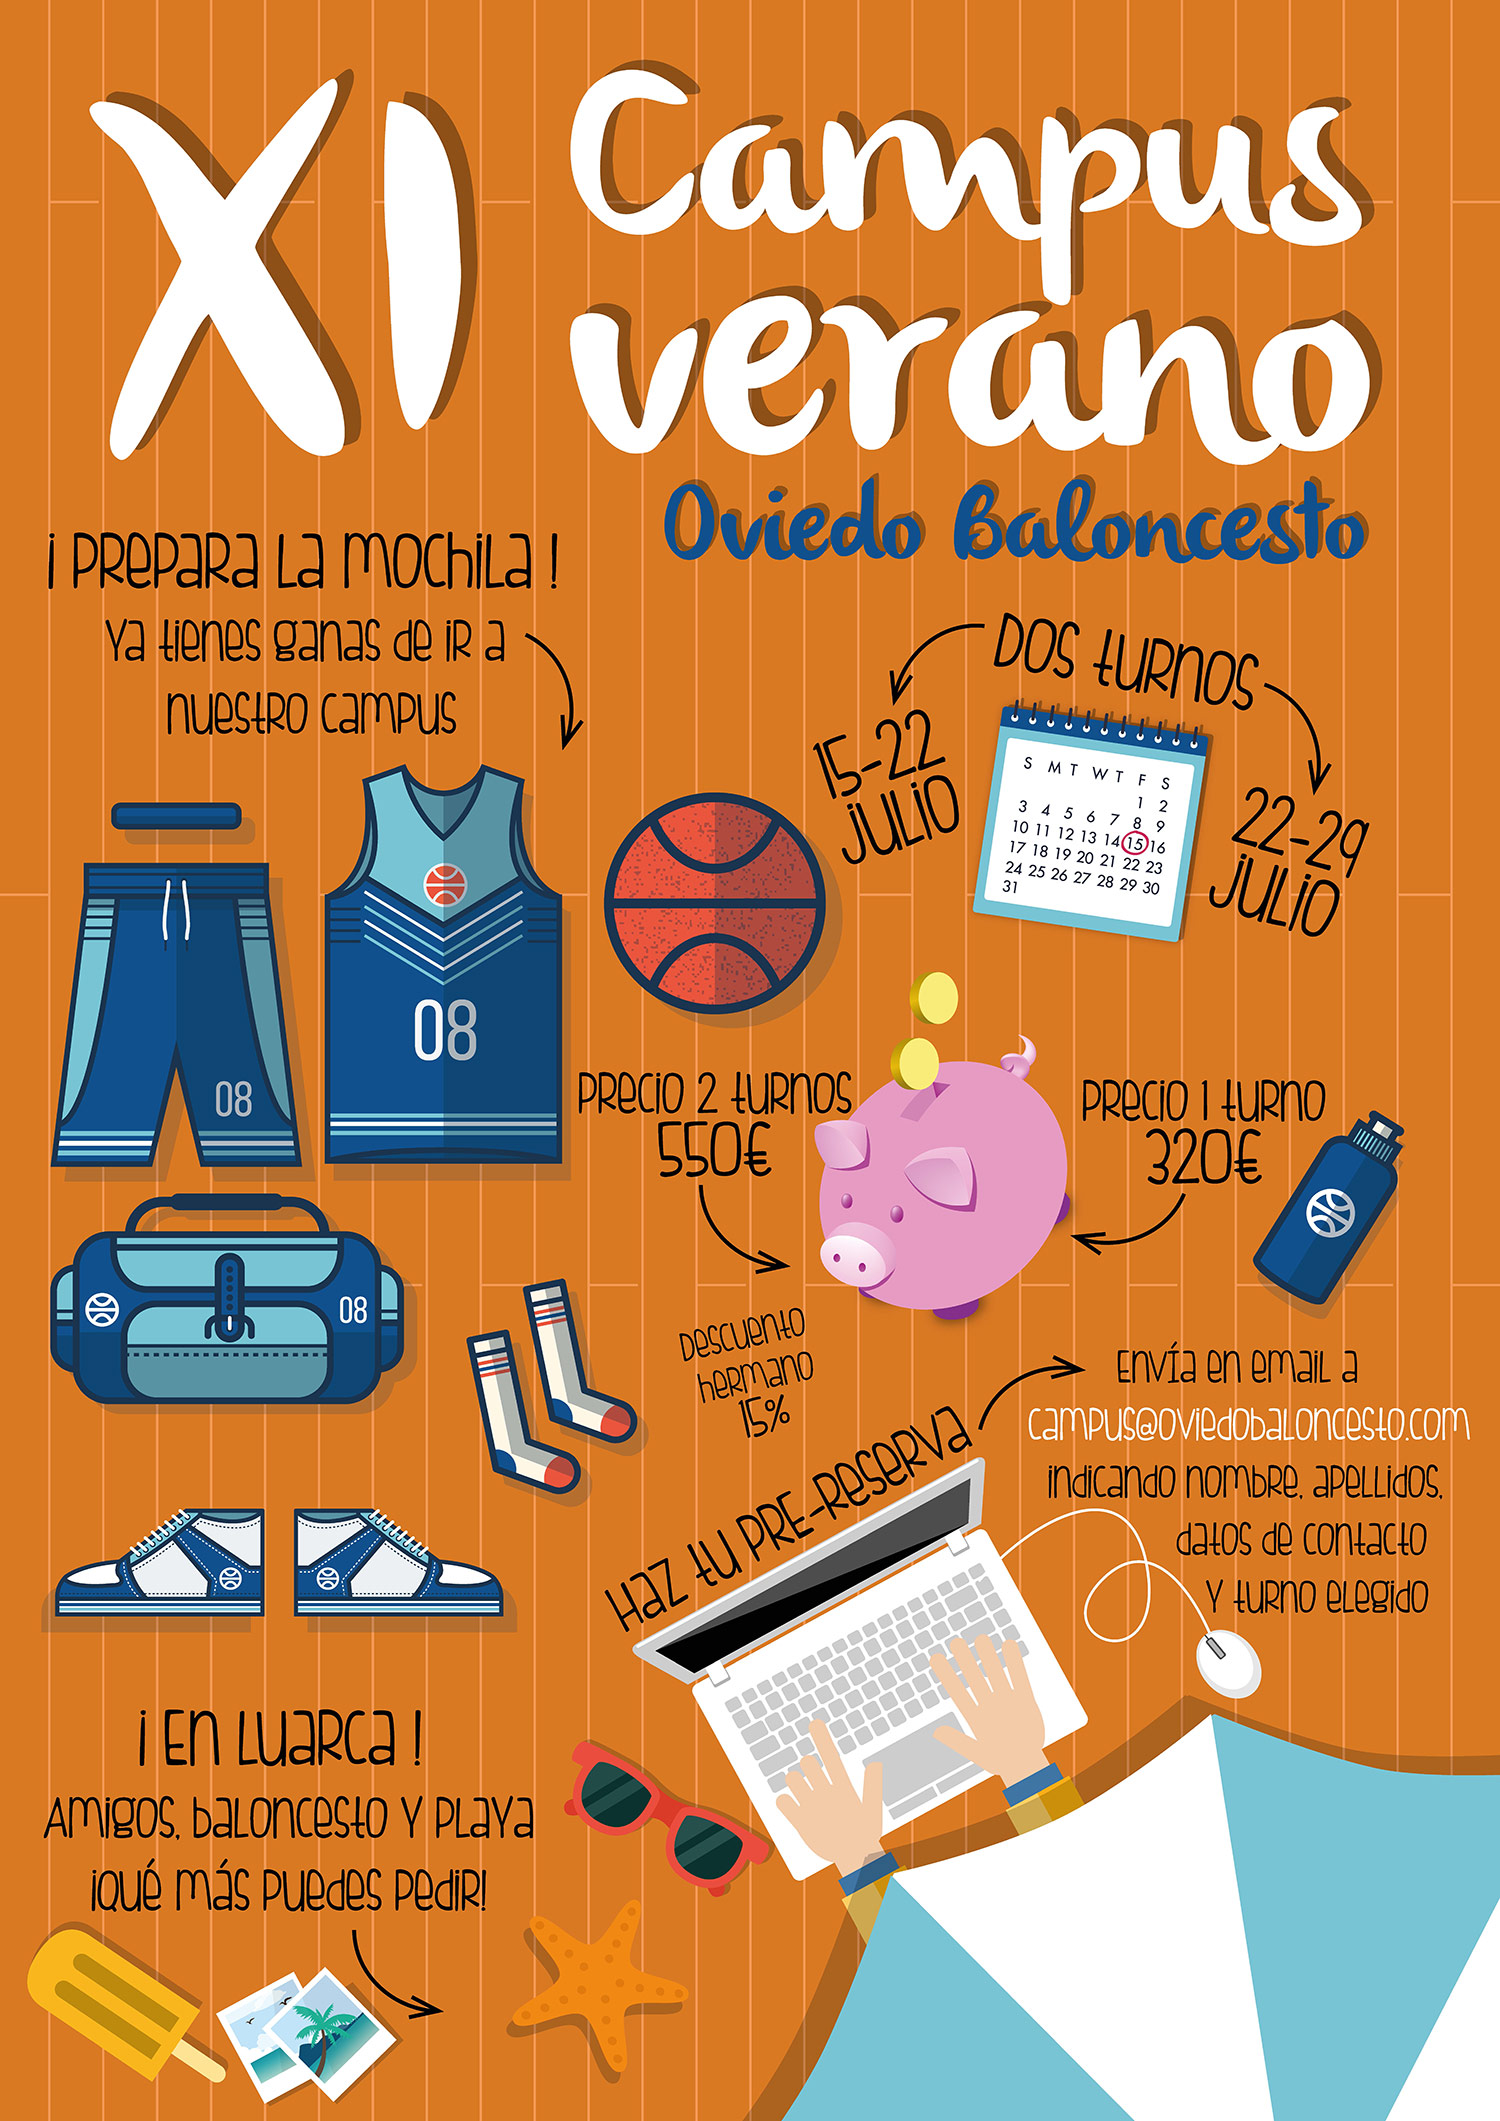 Campus Verano Oviedo Baloncesto 2016